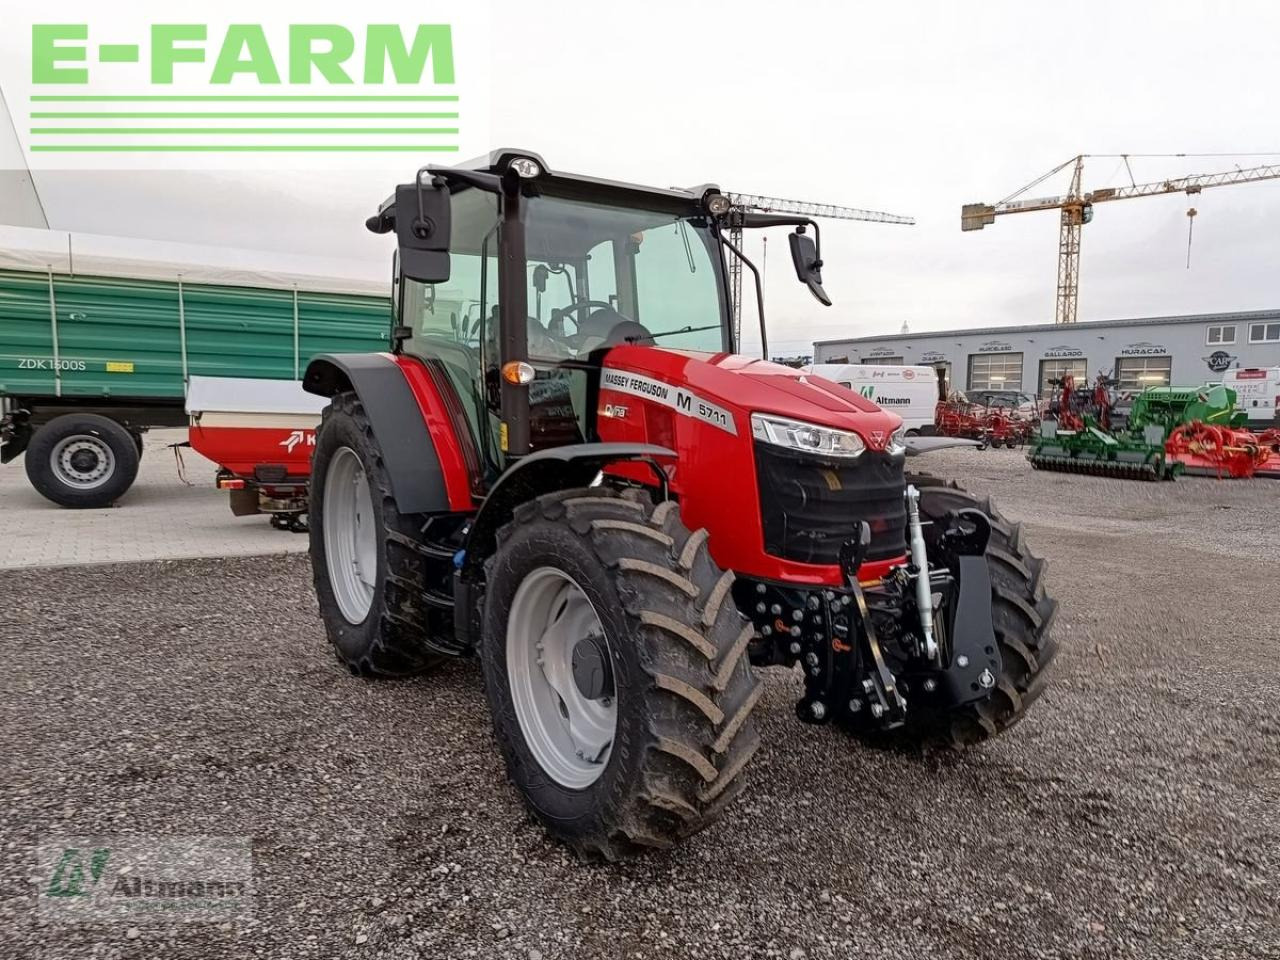 Farm tractor Massey Ferguson mf 5711 m: picture 3